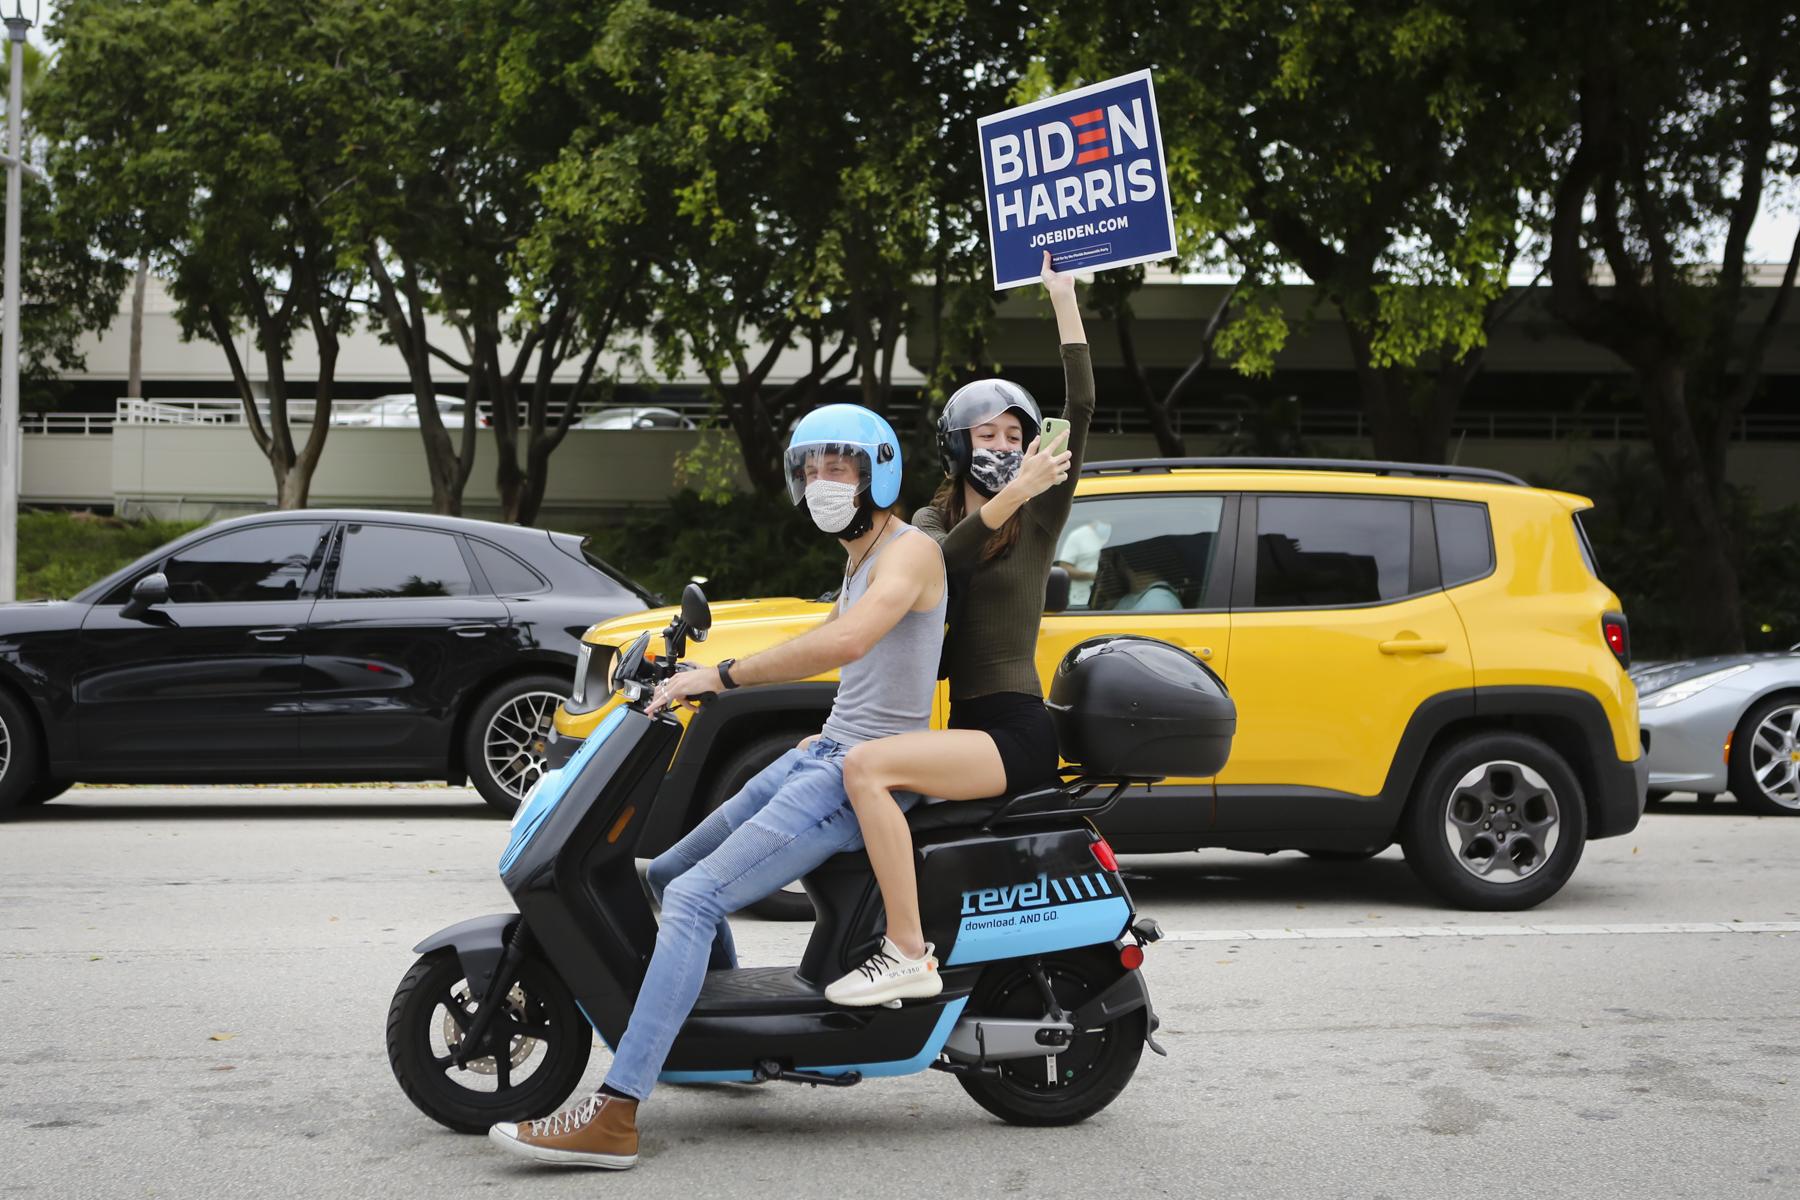 Election 2020 @ Miami, FL - FLORIDA, USA - NOVEMBER 7: Supporters of the Democratic...